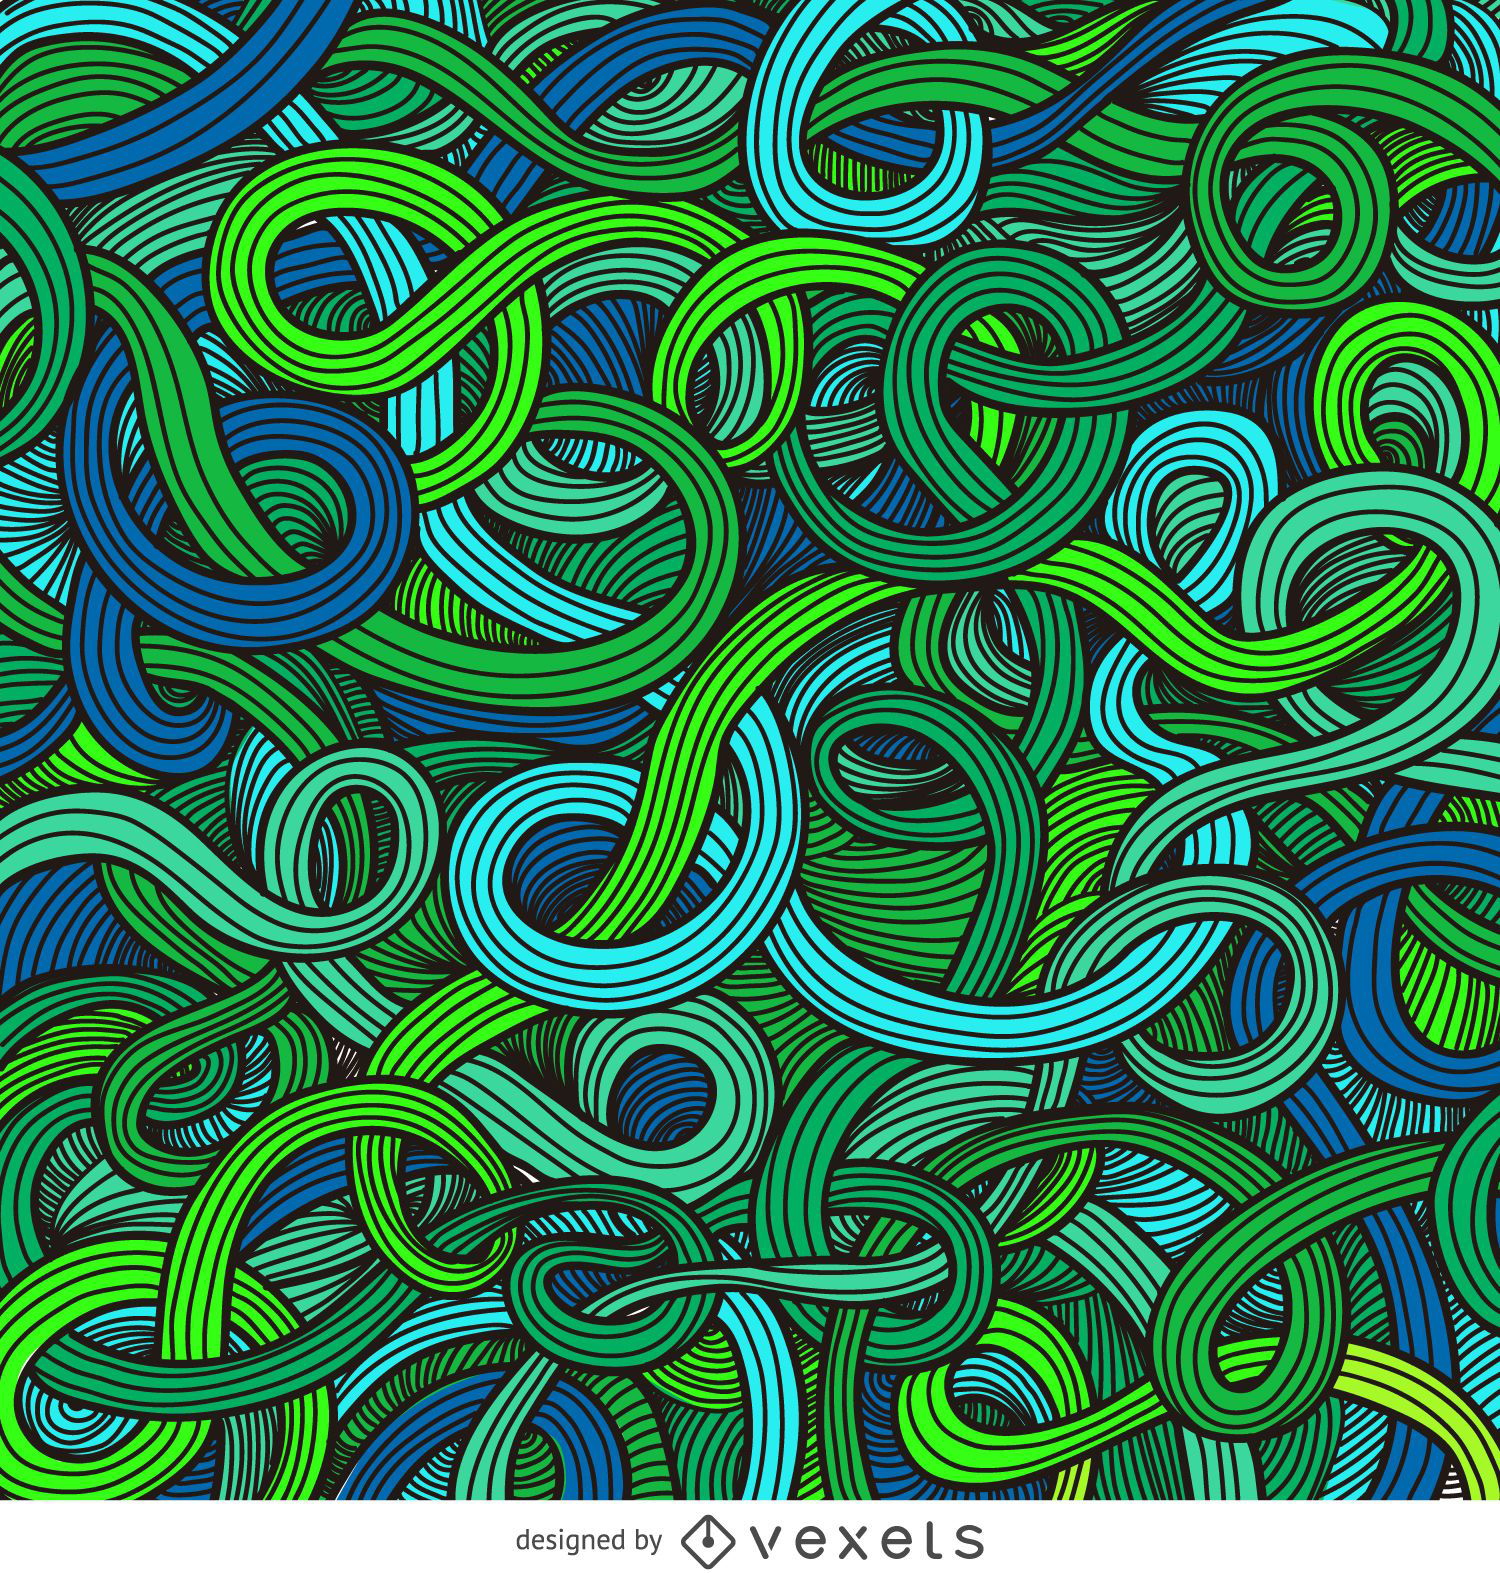 Bright ornamental curly swirls background